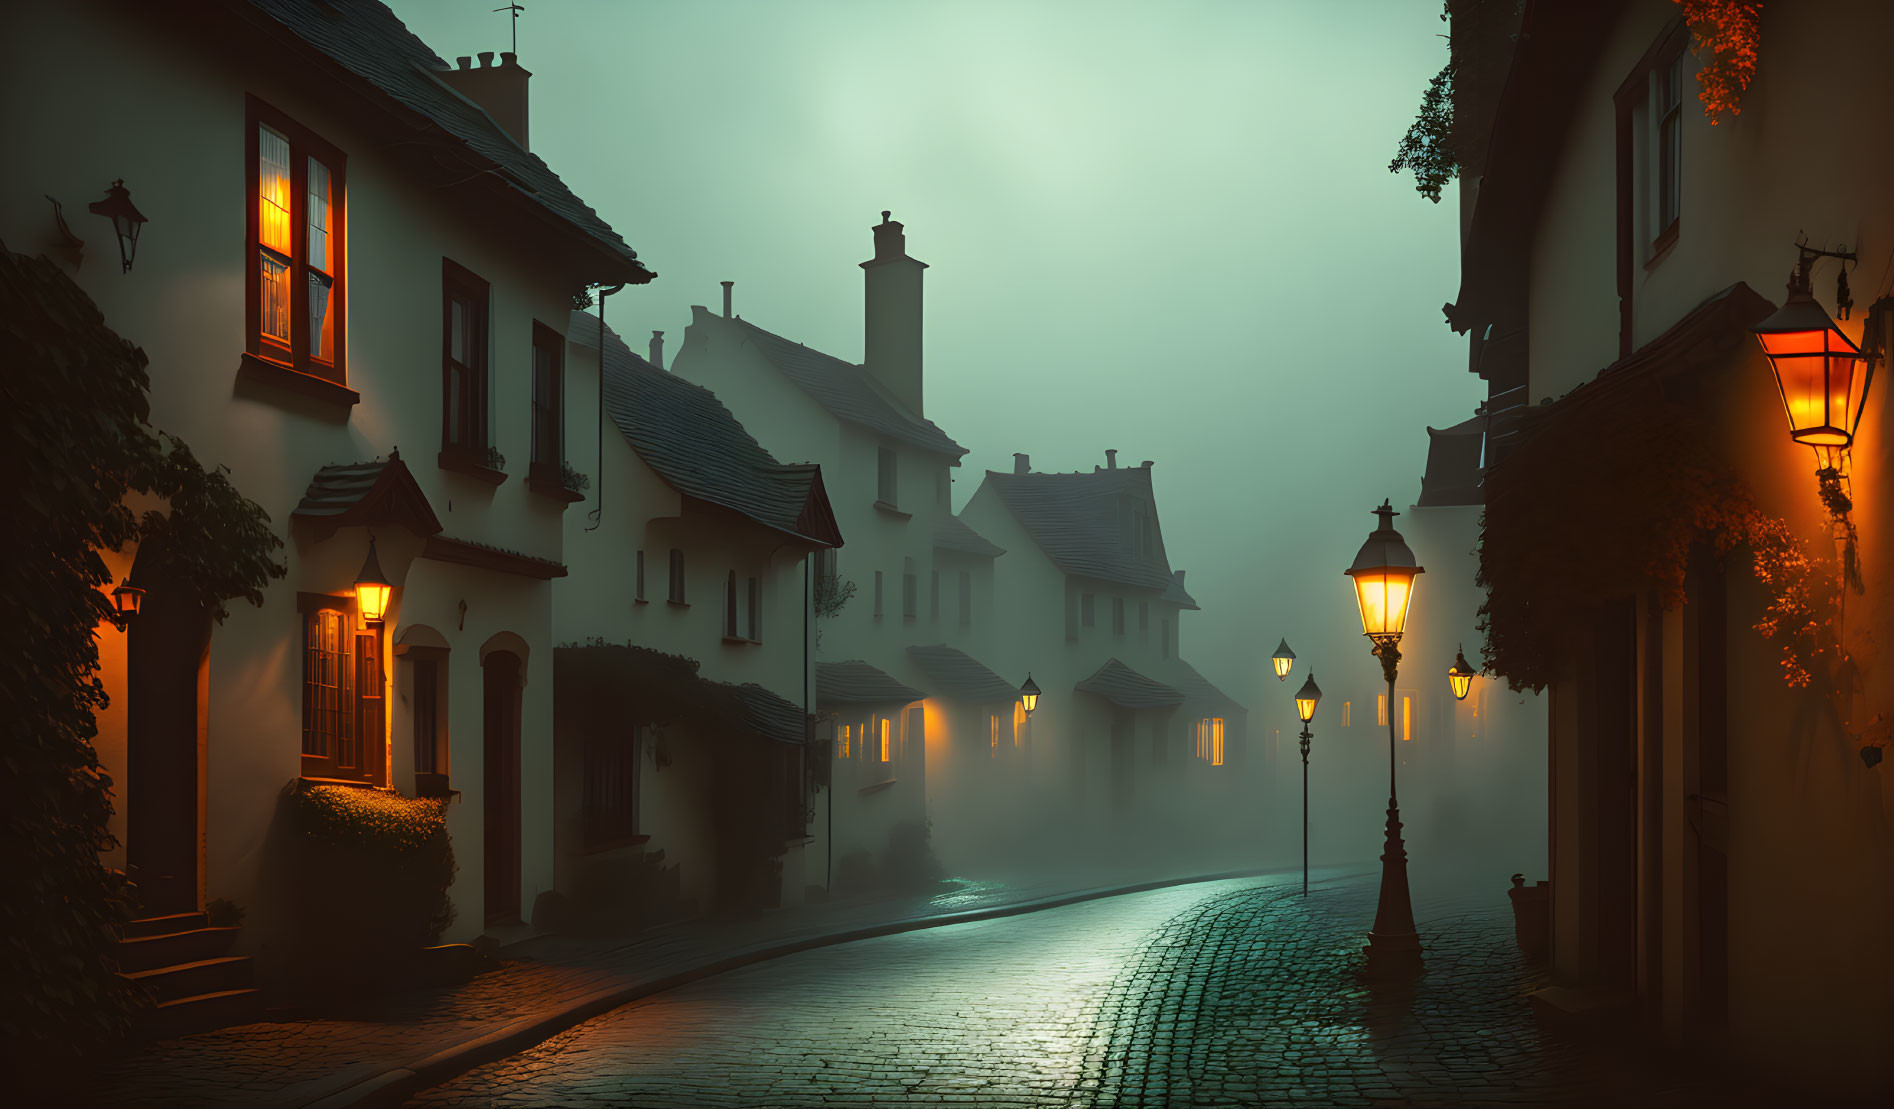 Foggy night lit by street lamps